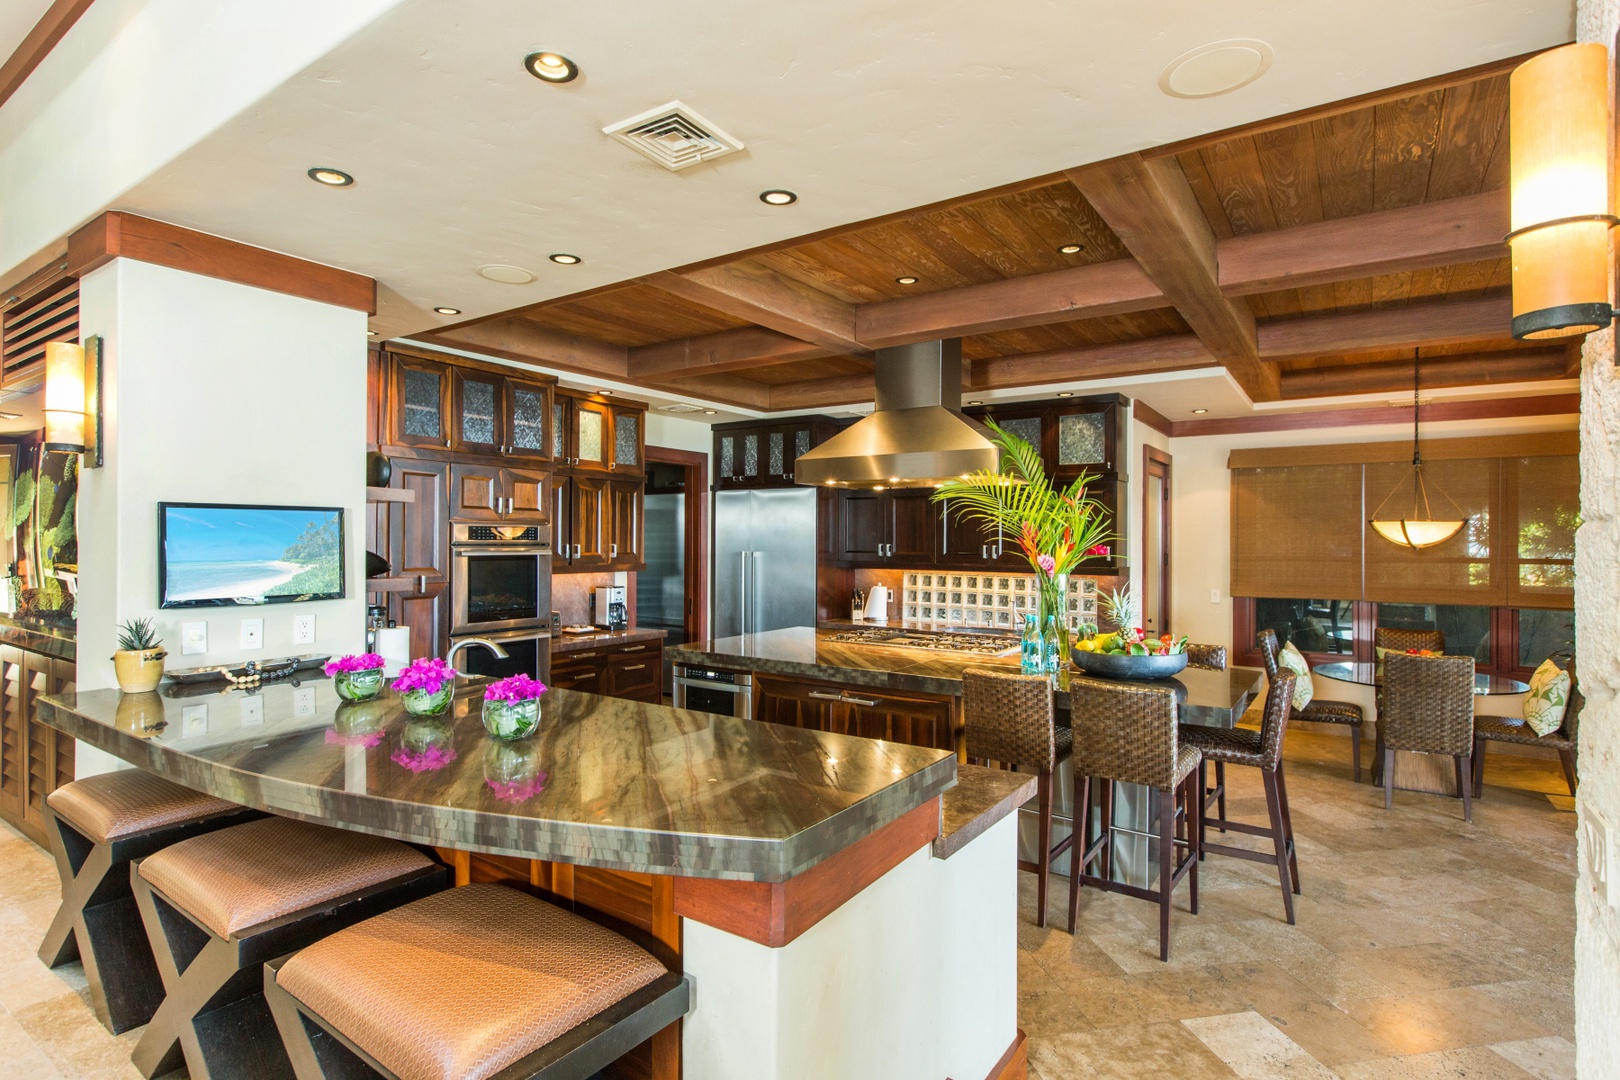 Honolulu Vacation Rentals, Royal Kahala Estate 4 Bedroom - Kitchen